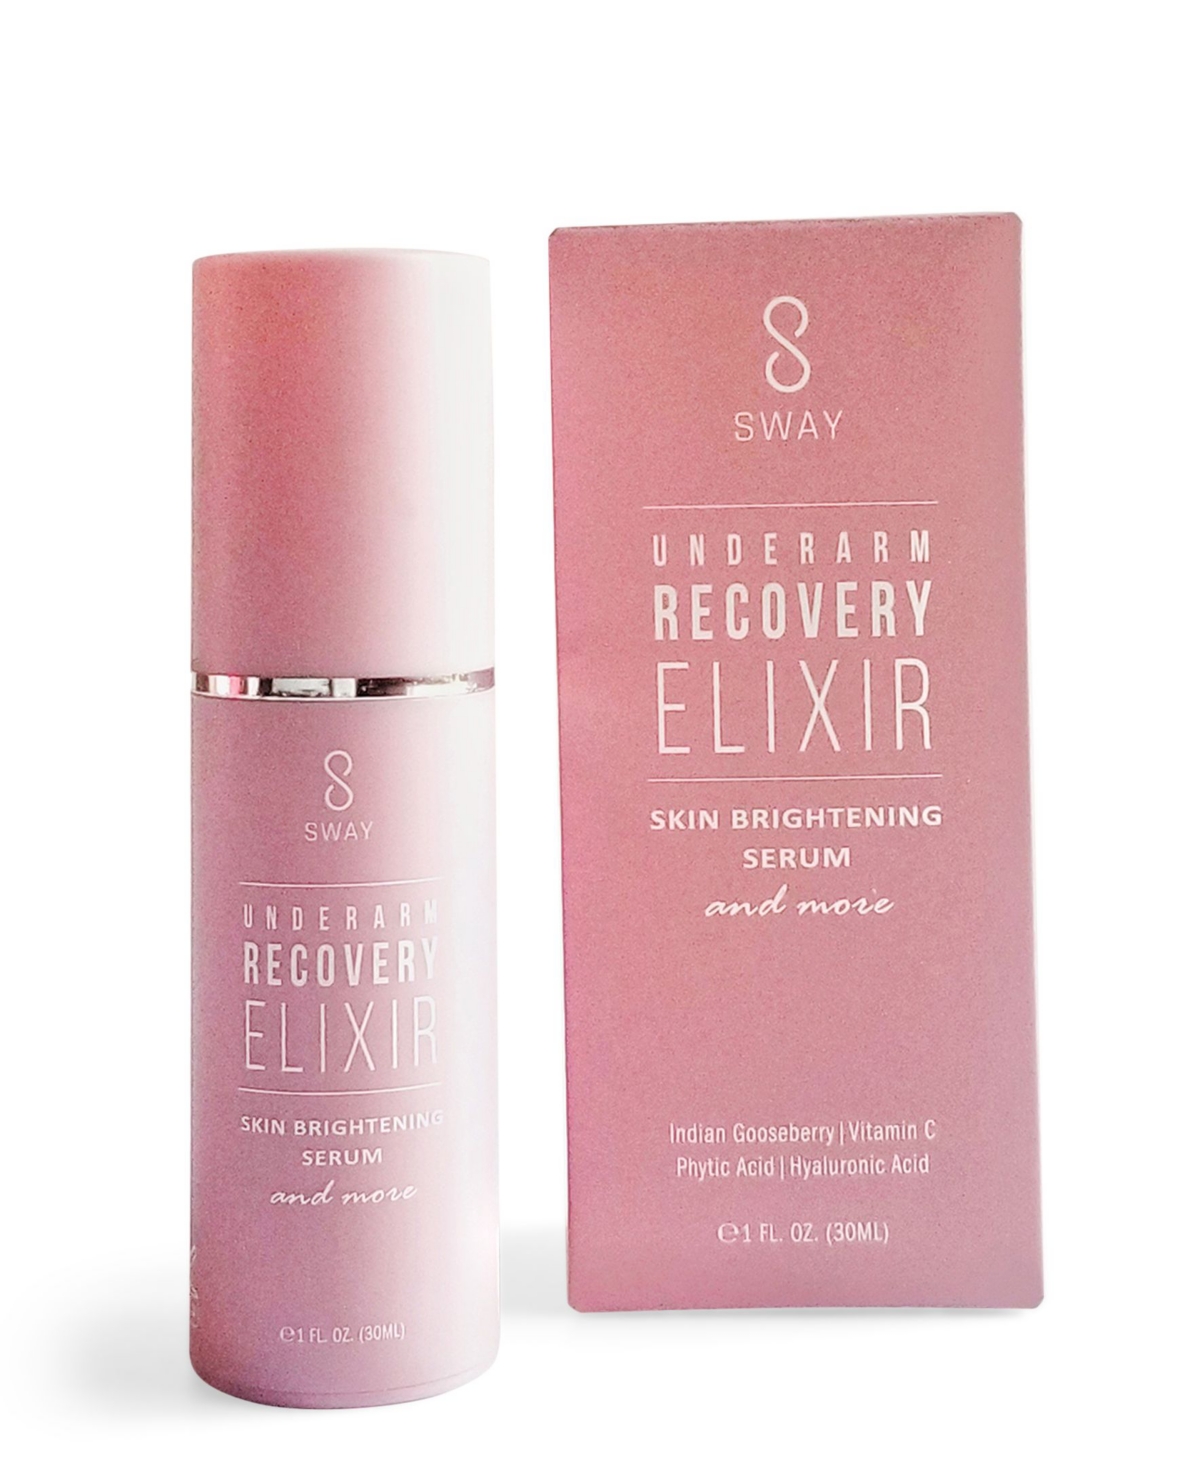 Underarm Recovery Elixir Skin Brightening Serum, 1.7 oz.